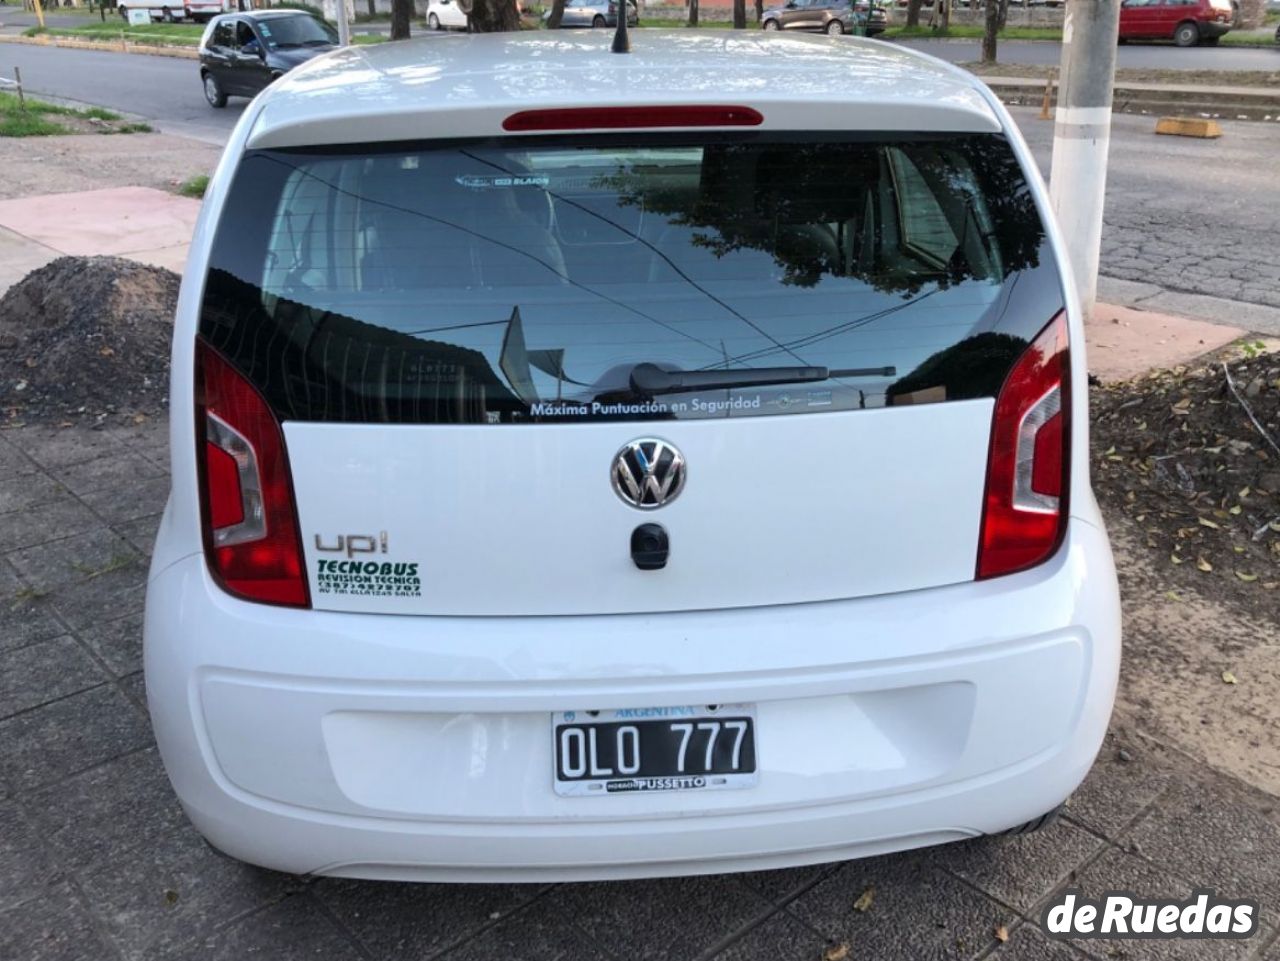 Volkswagen UP Usado en Salta, deRuedas